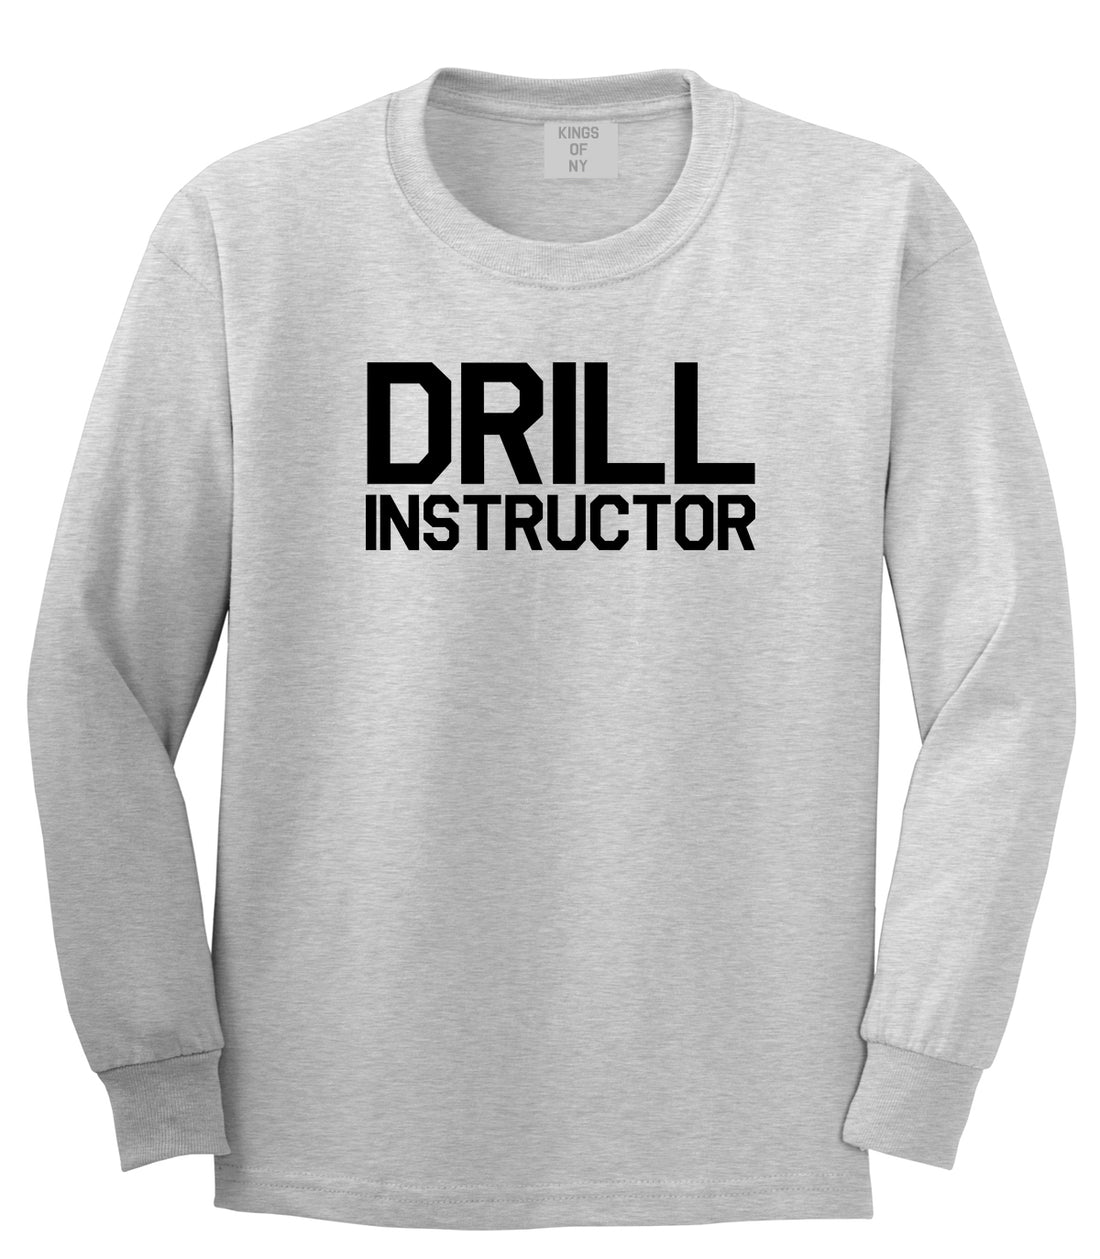 Drill Instructor Mens Grey Long Sleeve T-Shirt by Kings Of NY